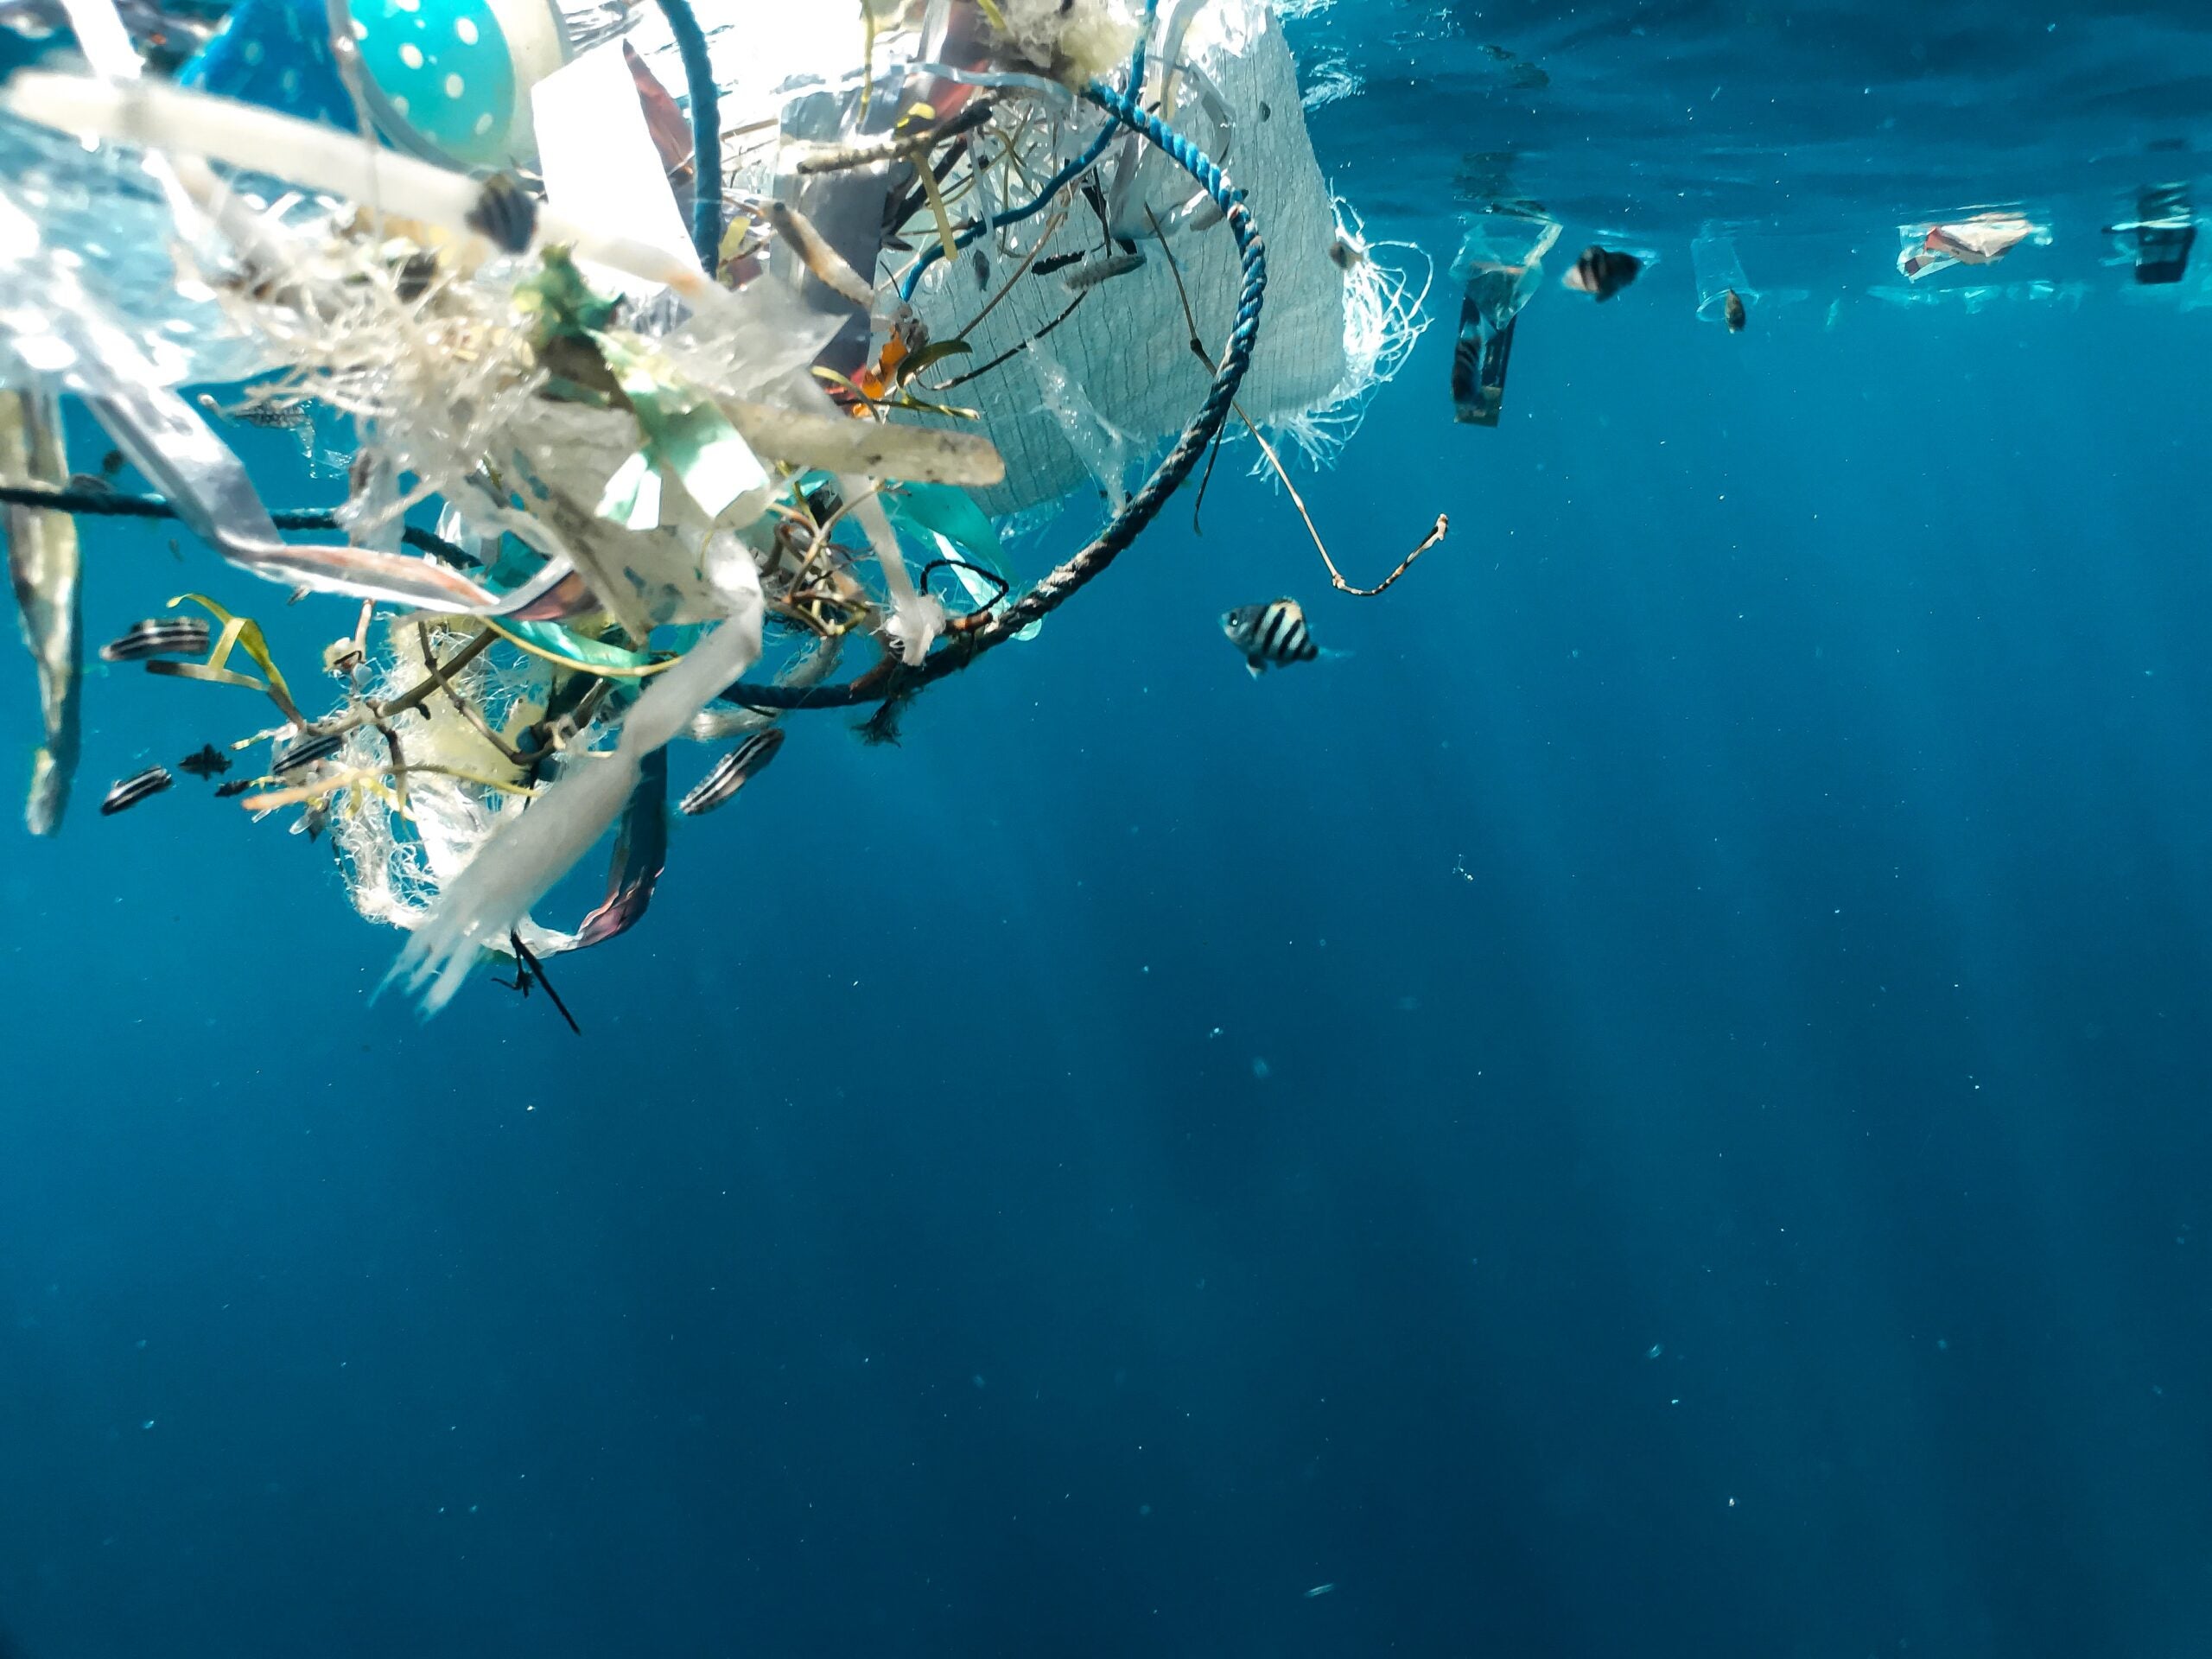 Australia and Indonesia partner to address plastic pollution